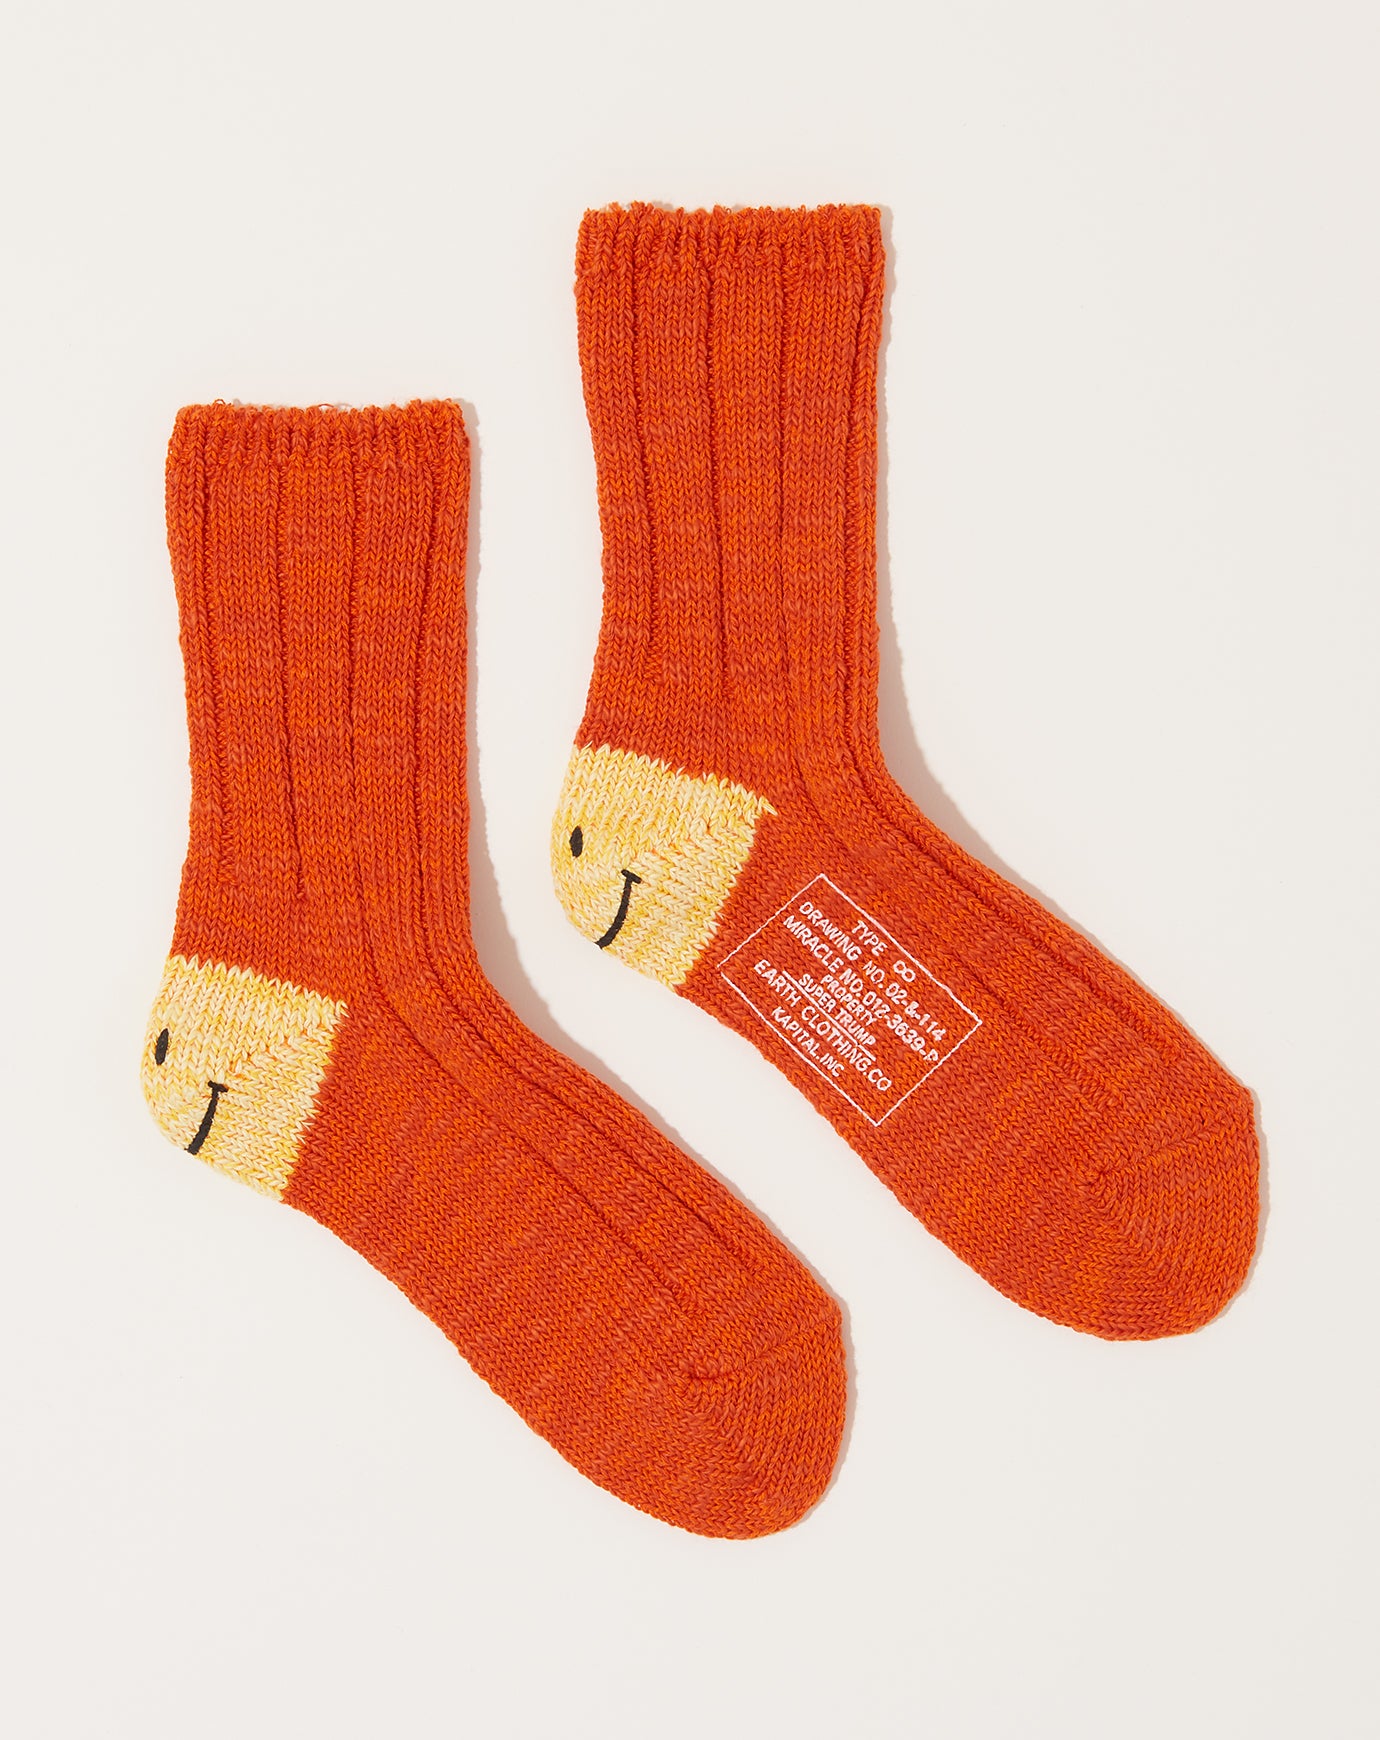 Kapital 56 Yarns Heel Smilie Socks in Orange